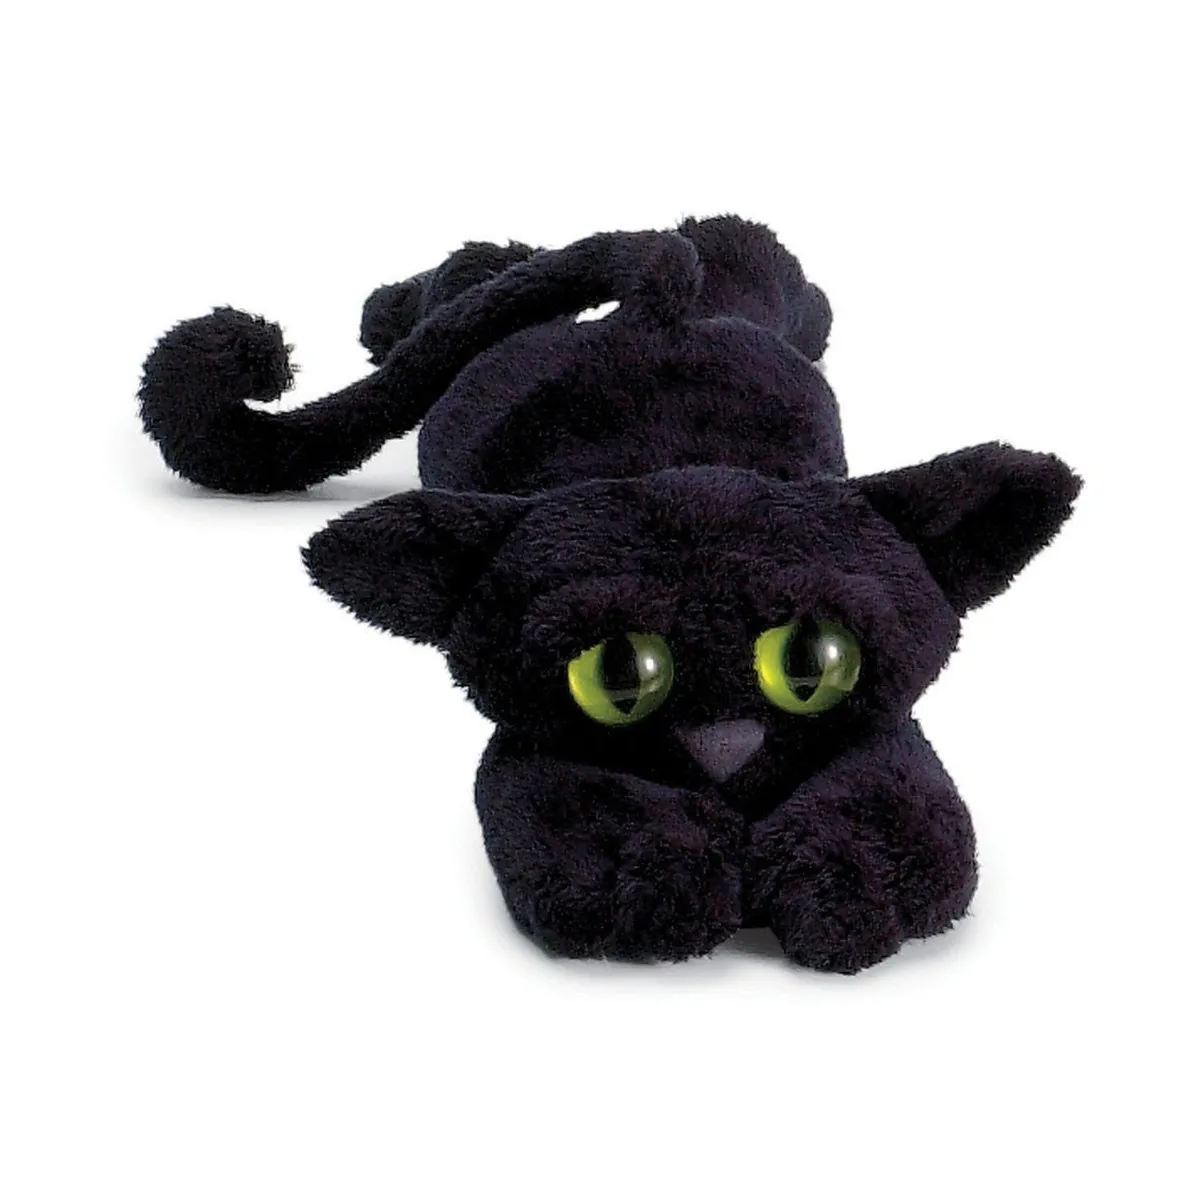 Черно плюшевая. Мягкая игрушка черный кот. Мягкая игрушка черная кошка. Плюшевая игрушка черный кот. Мягкая игрушка «чёрный котик».